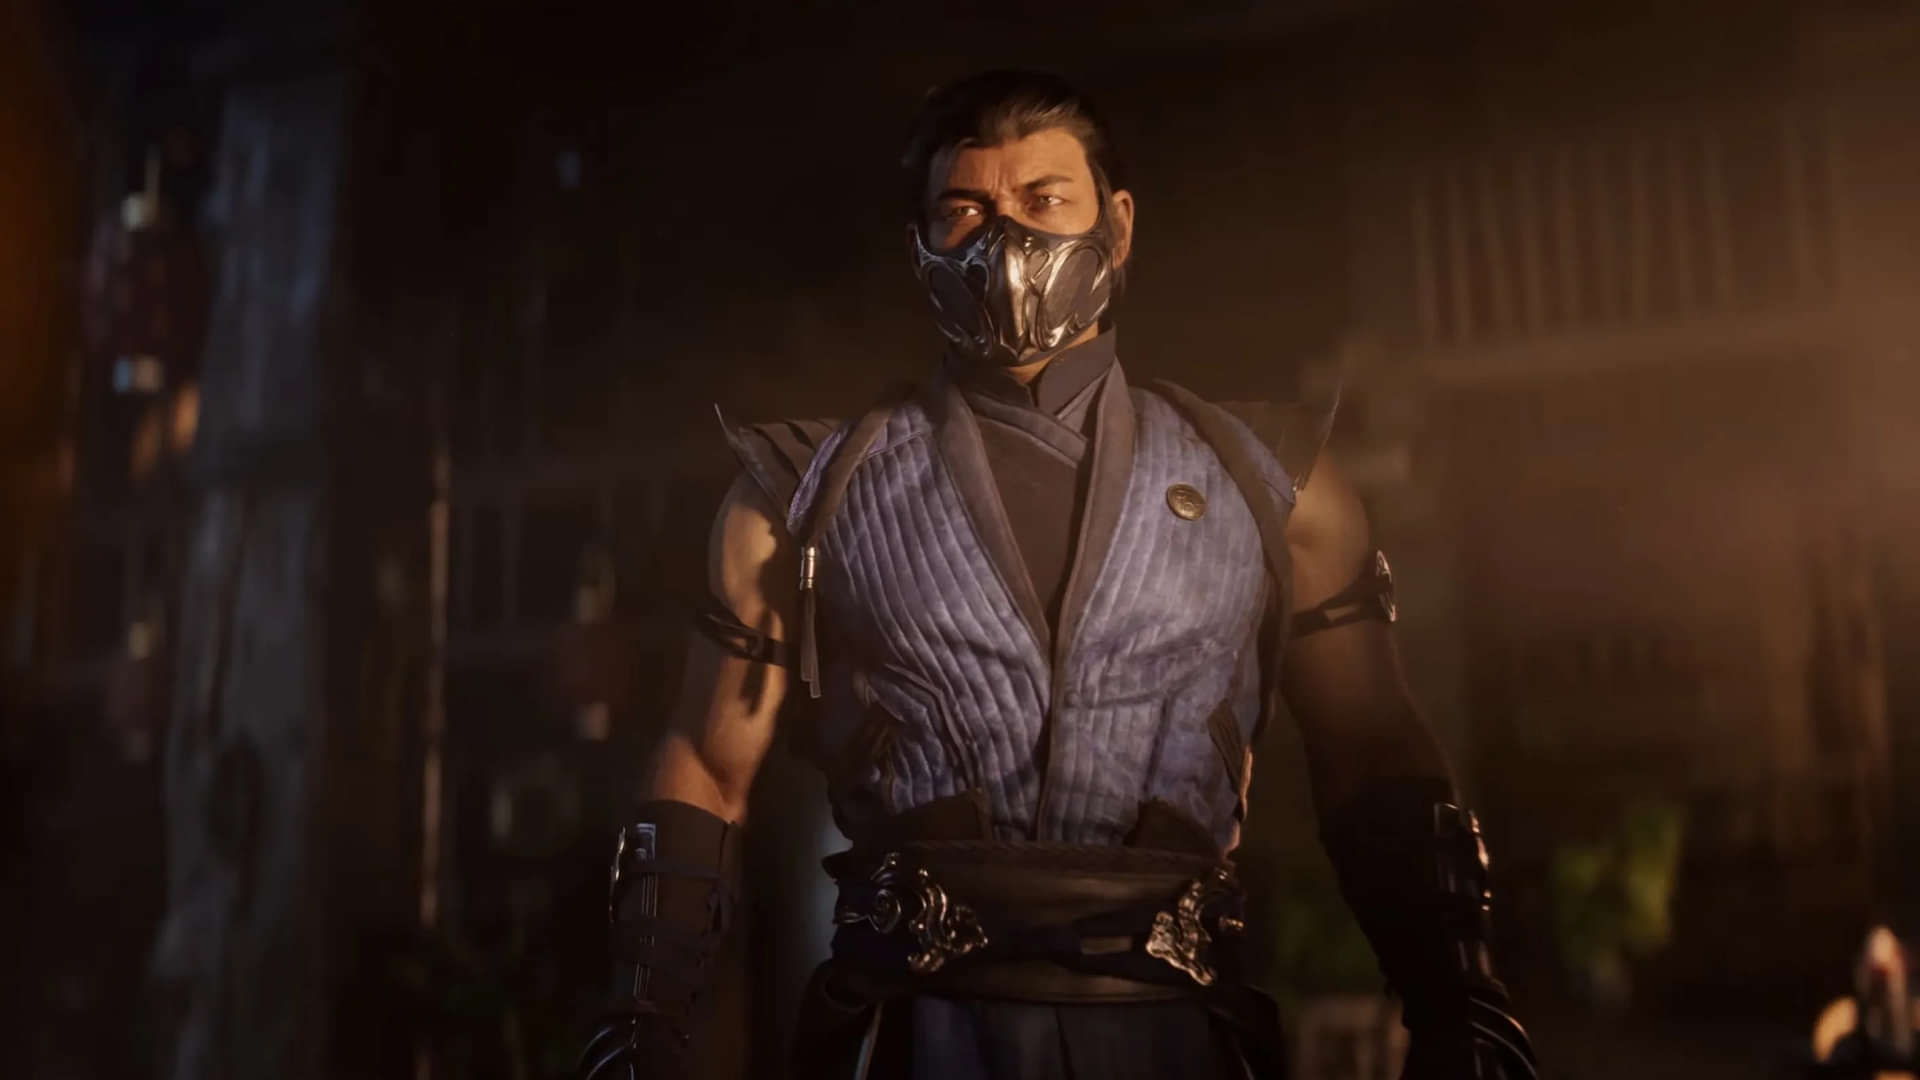 All Mortal Kombat 1 Fatalities on Video: Sub-Zero, Scorpion